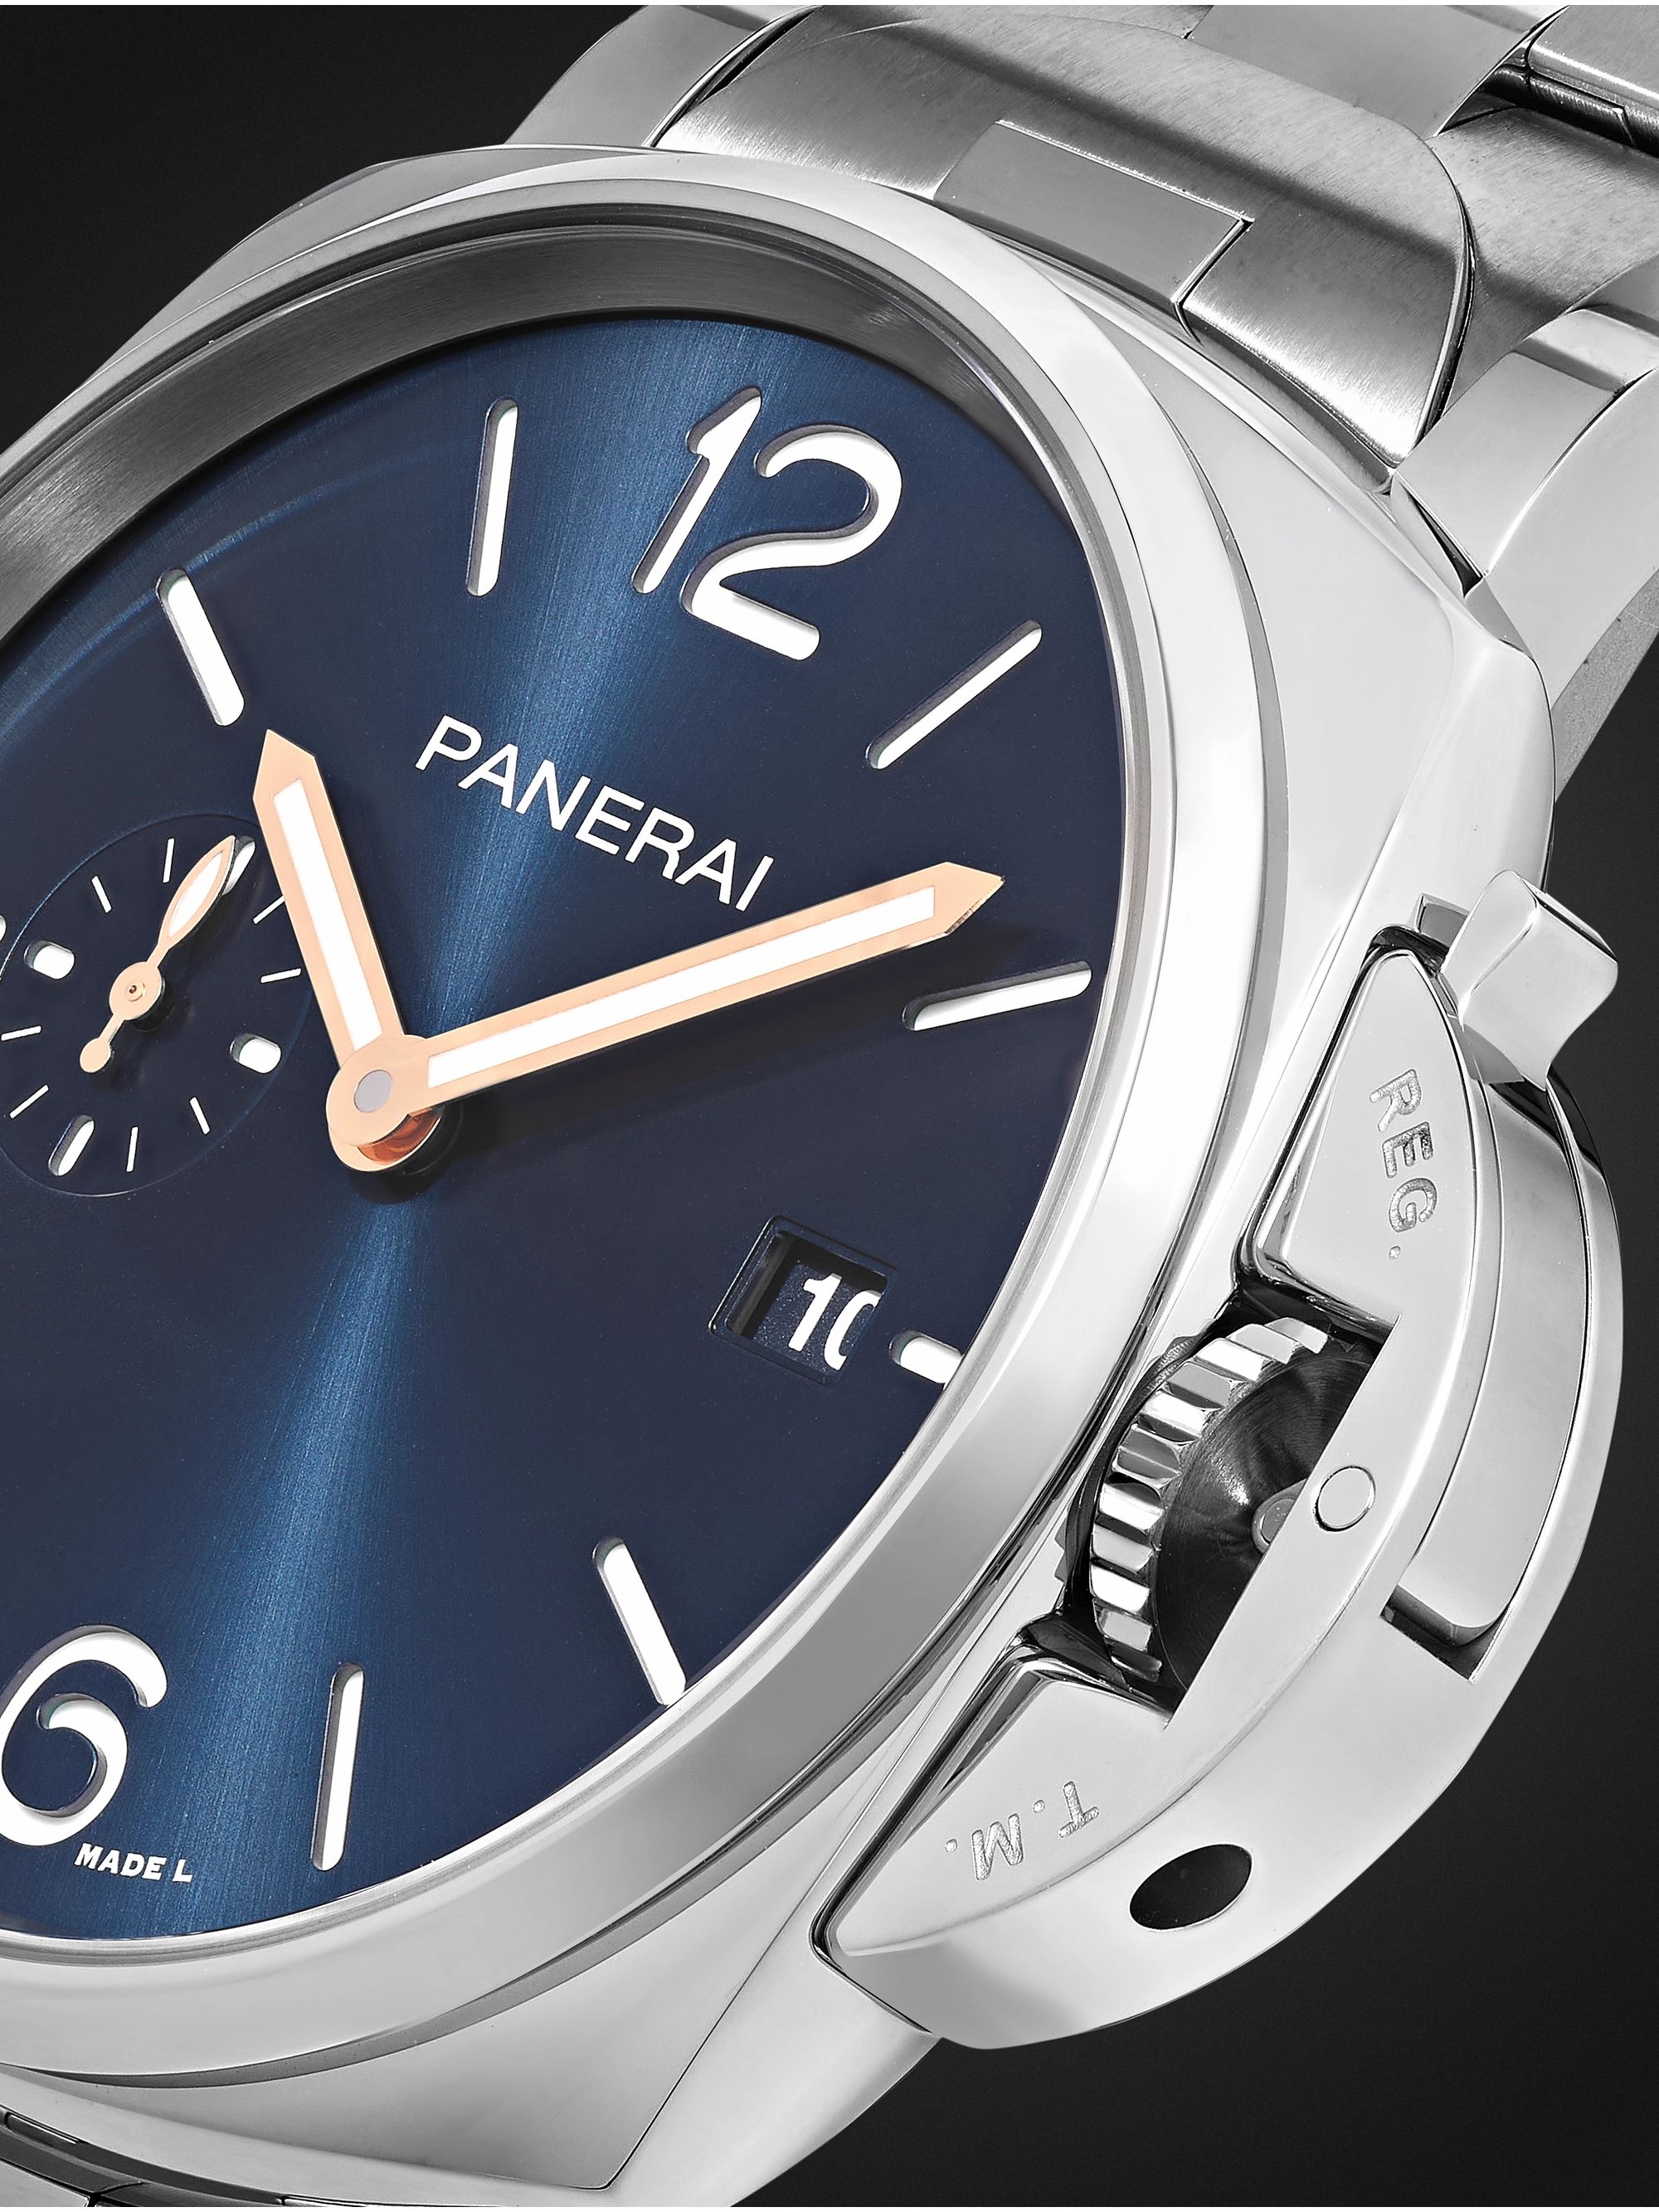 PANERAI Luminor Due Automatic 42mm Stainless Steel Watch, Ref. No. PAM01124